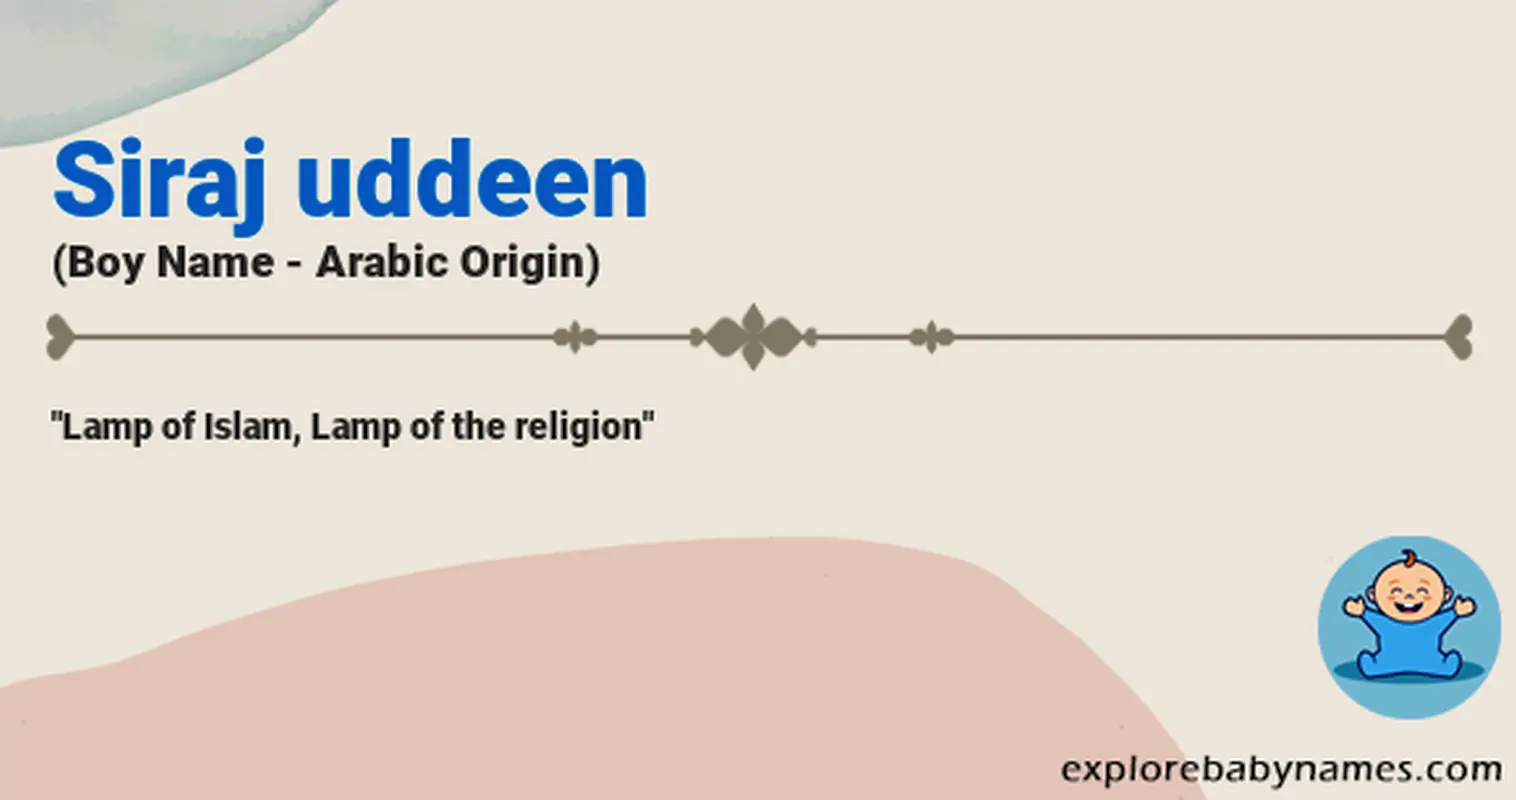 Meaning of Siraj uddeen